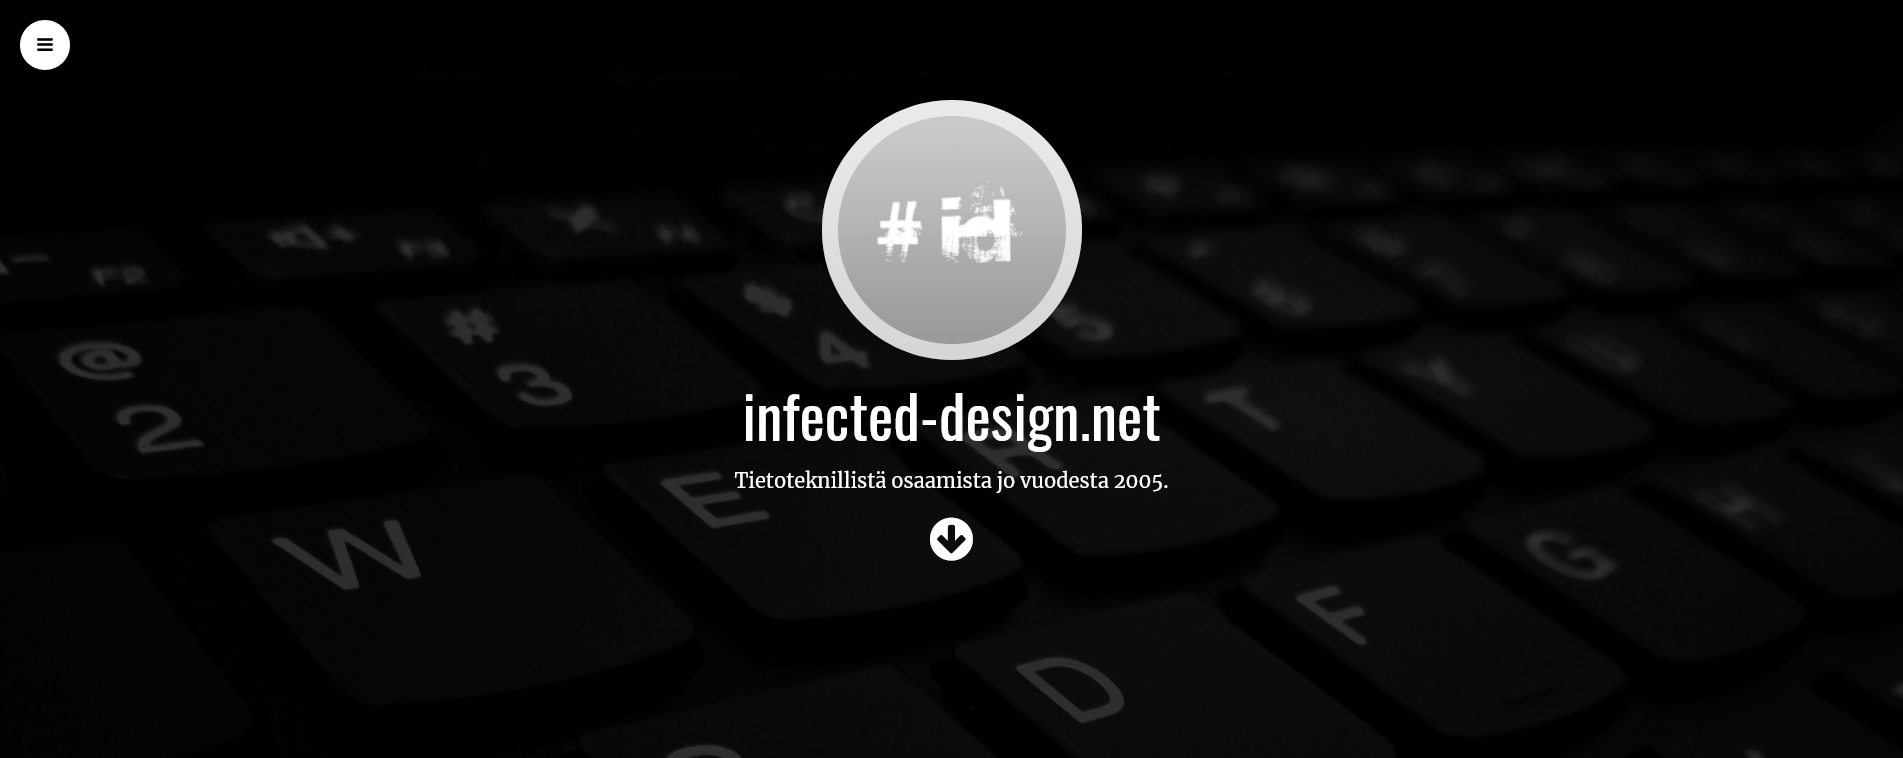 Infected-design.net - nyt